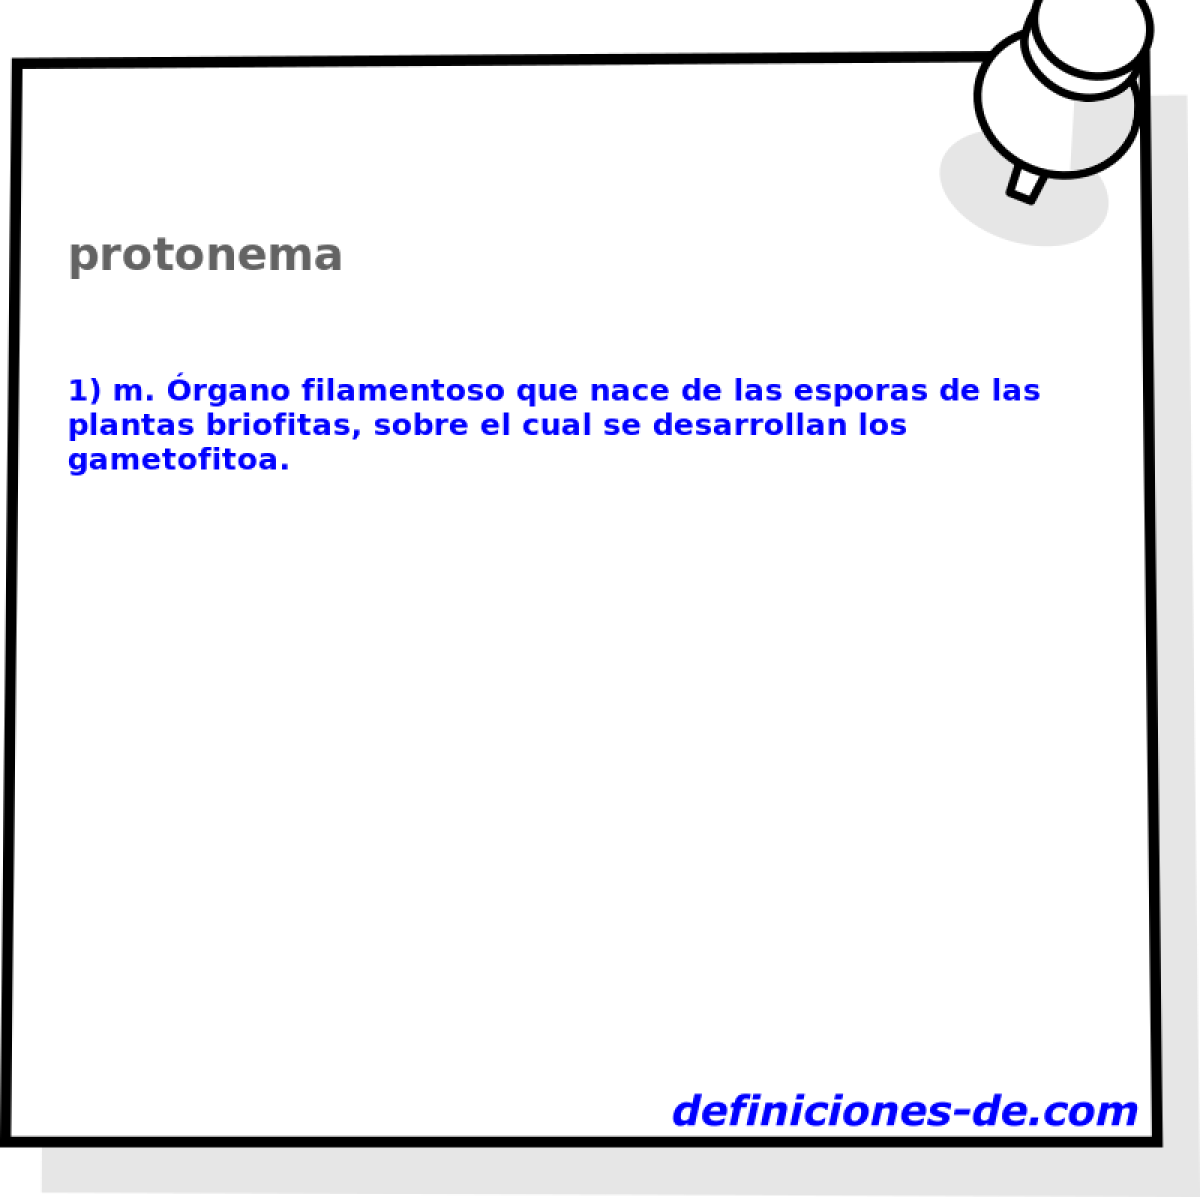 protonema 